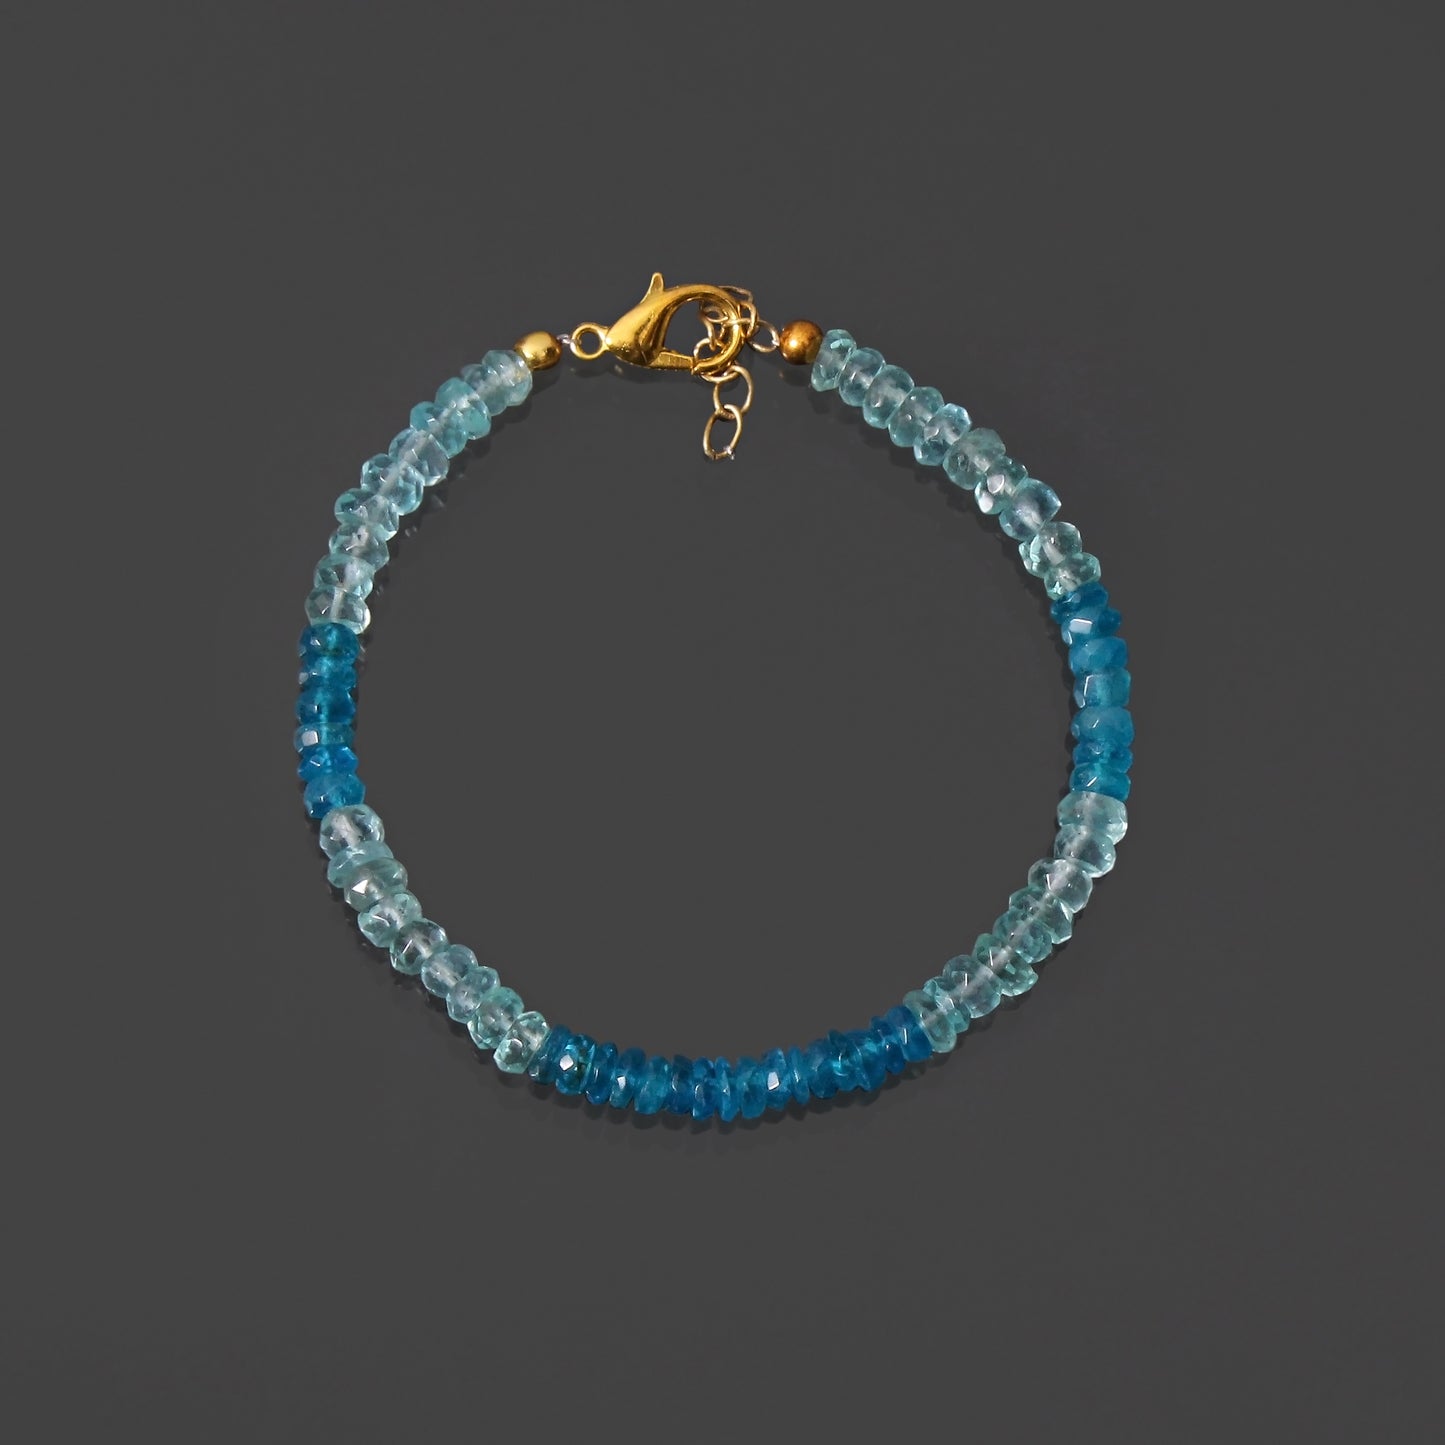 High Quality Aquamarine and Apatite Gemstone Bracelet